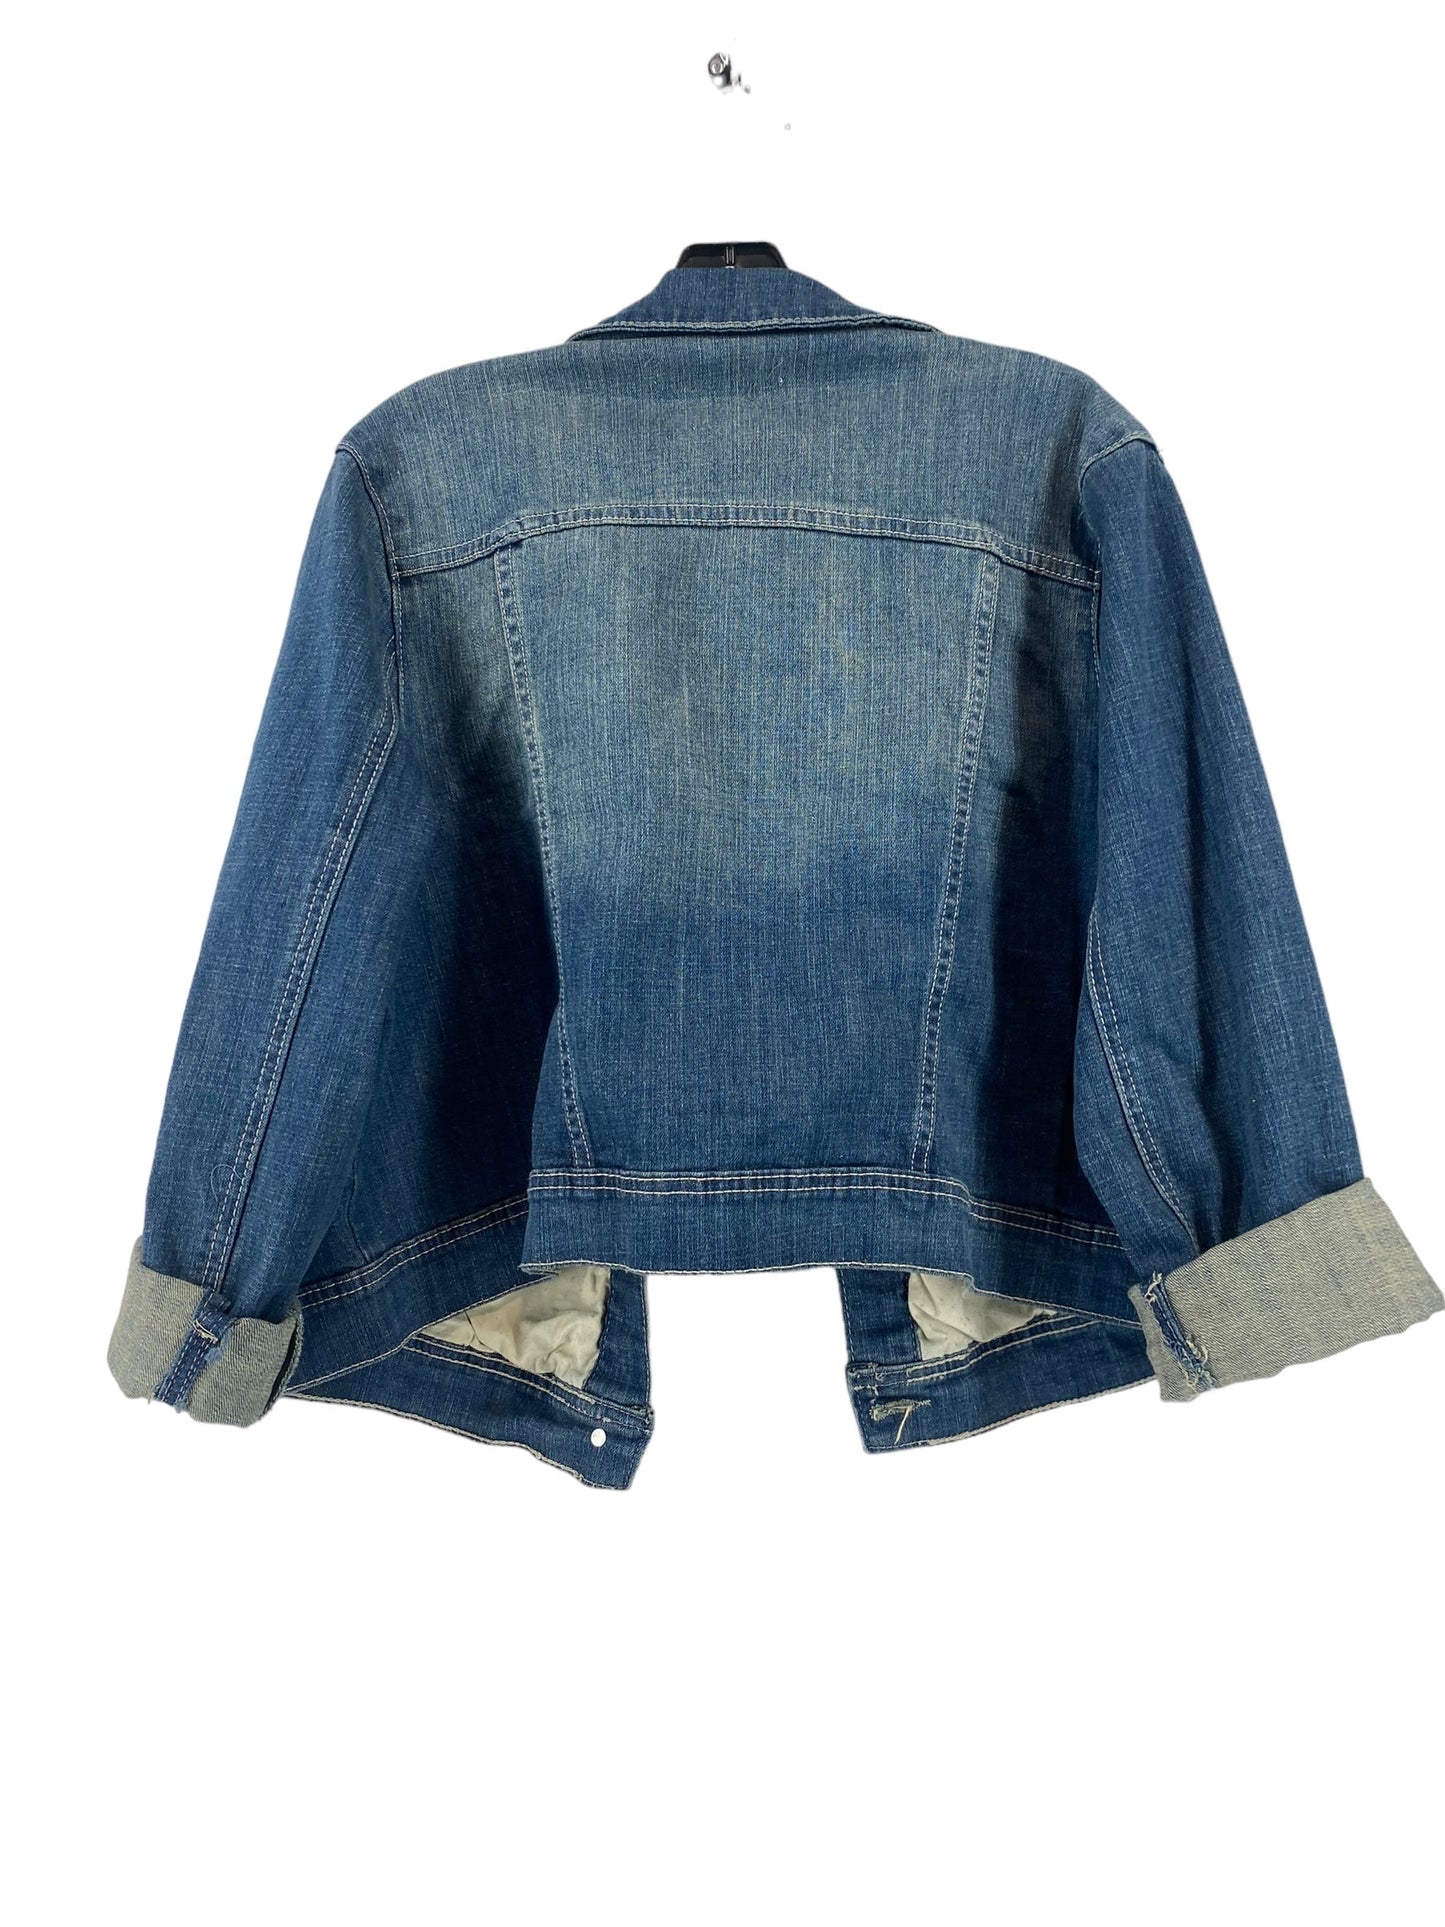 Blue Denim Jacket Denim Clothes Mentor, Size 1x